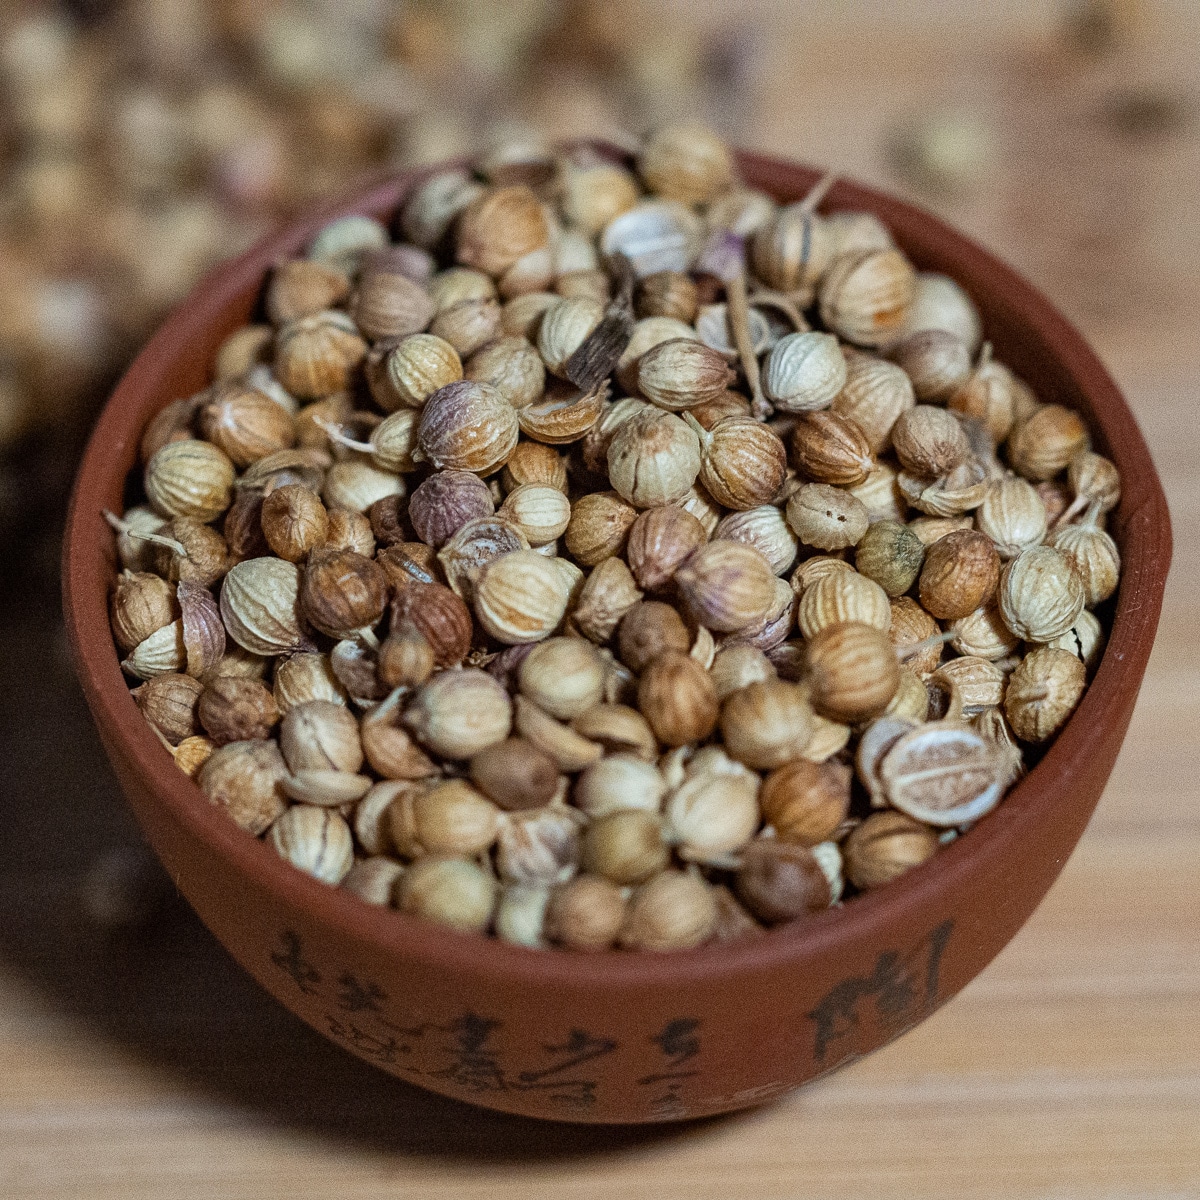 Coriander seeds in a dark brown pinch bowl on a wooden surface.